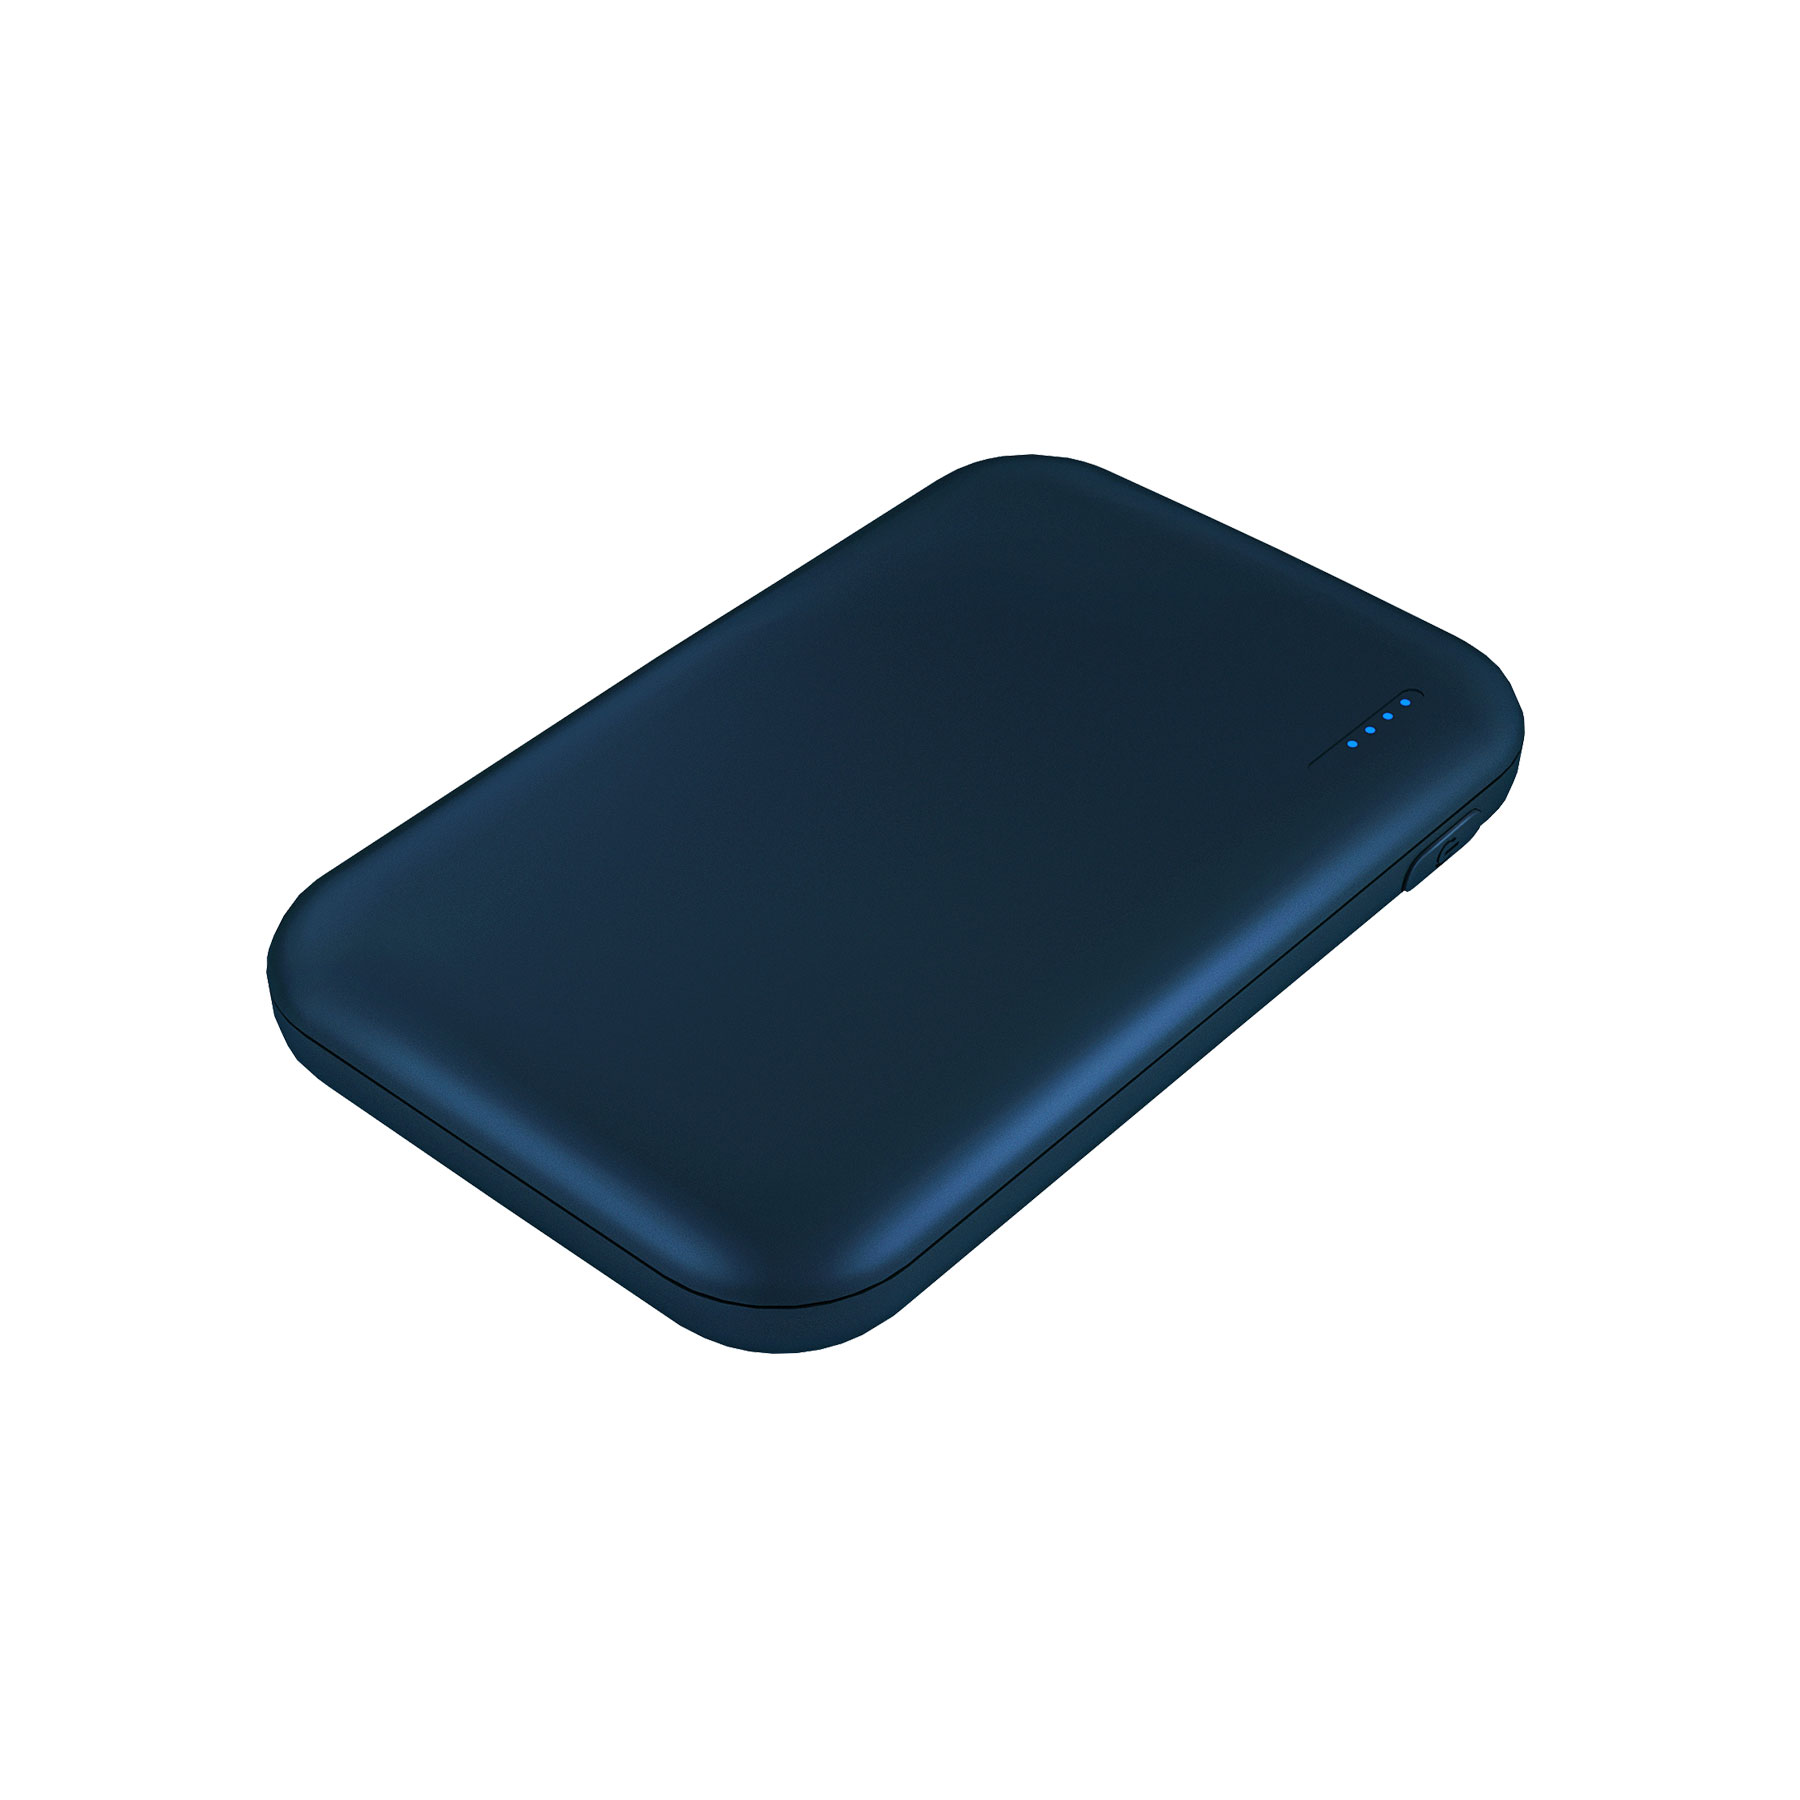 Артикул: A37424.030 — Внешний аккумулятор, Velutto, 5000 mAh, синий